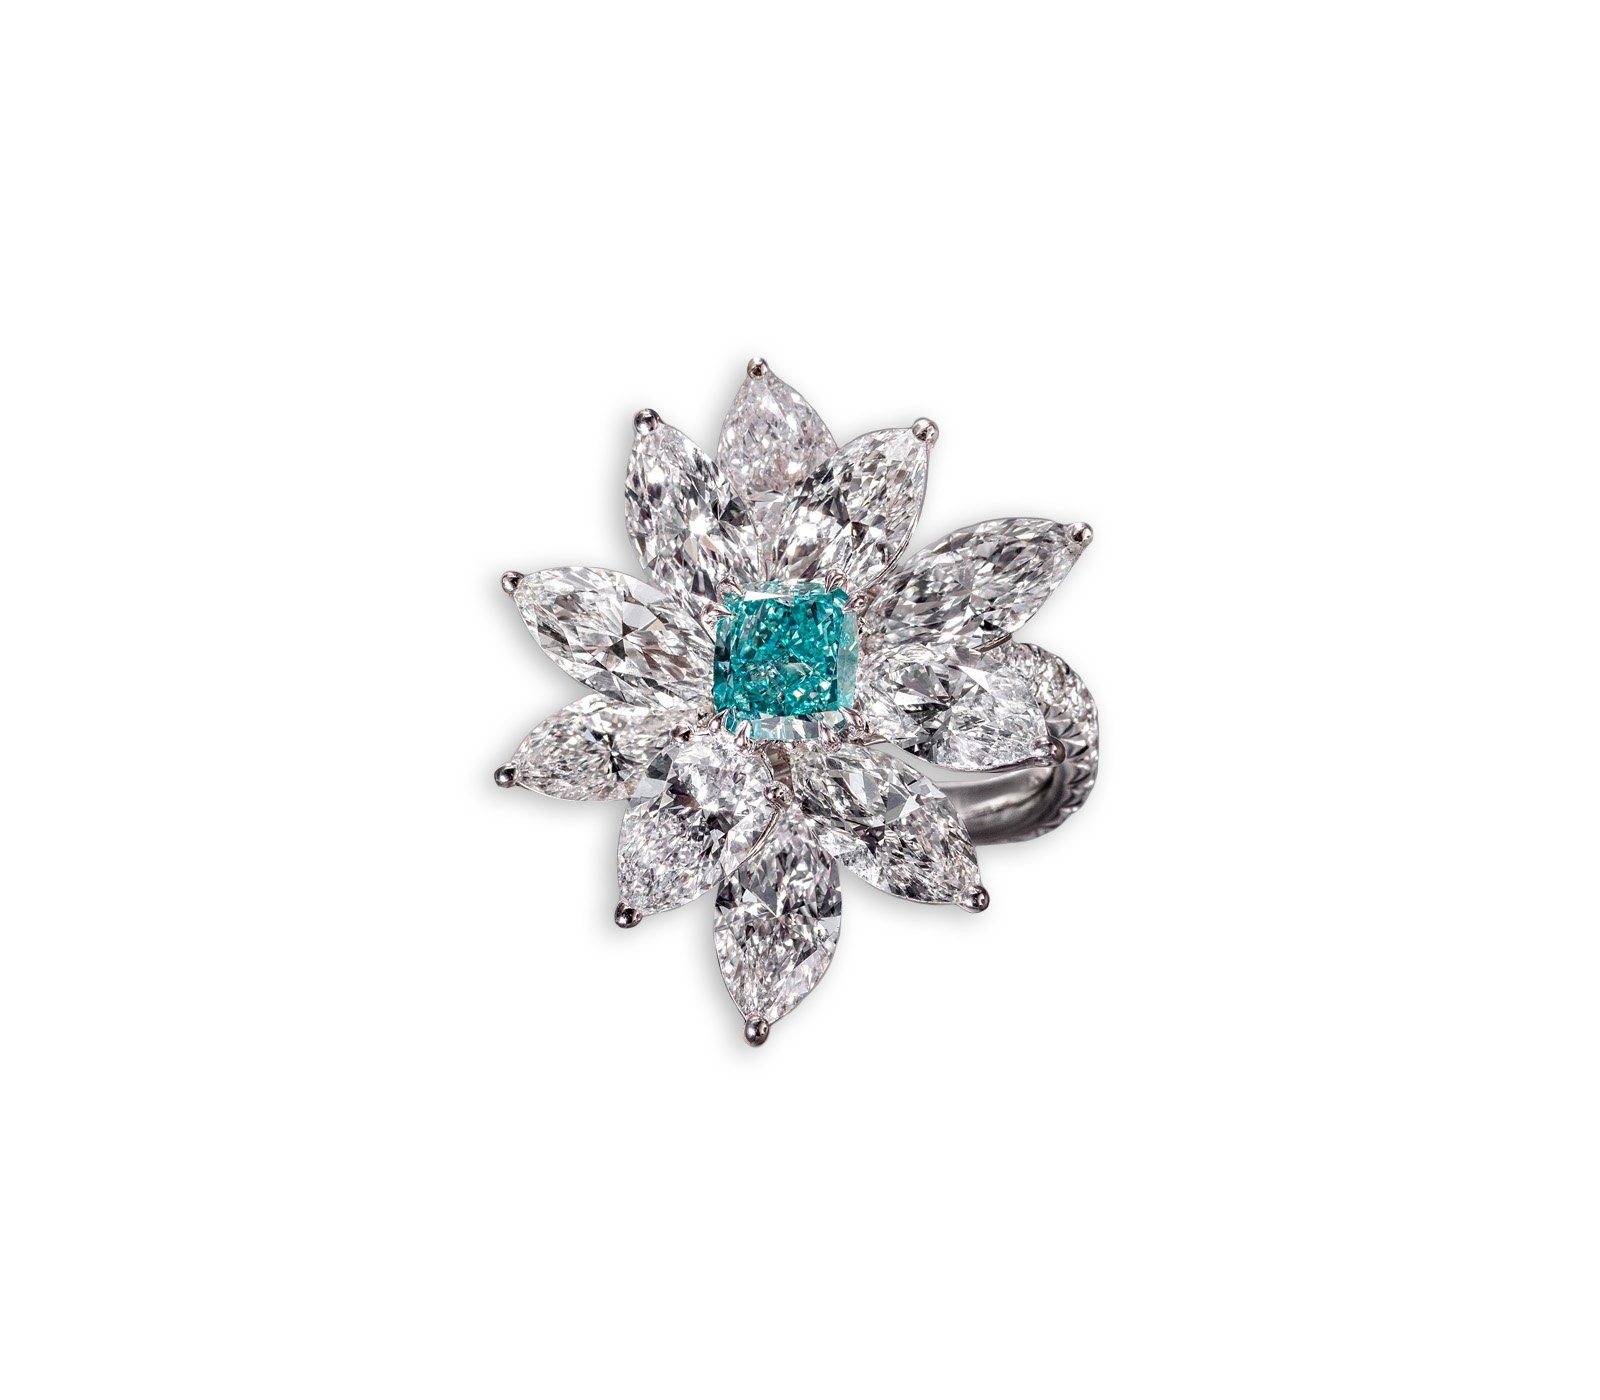 1576394851-vivid-blue-green-diamond-ring--1-.jpg